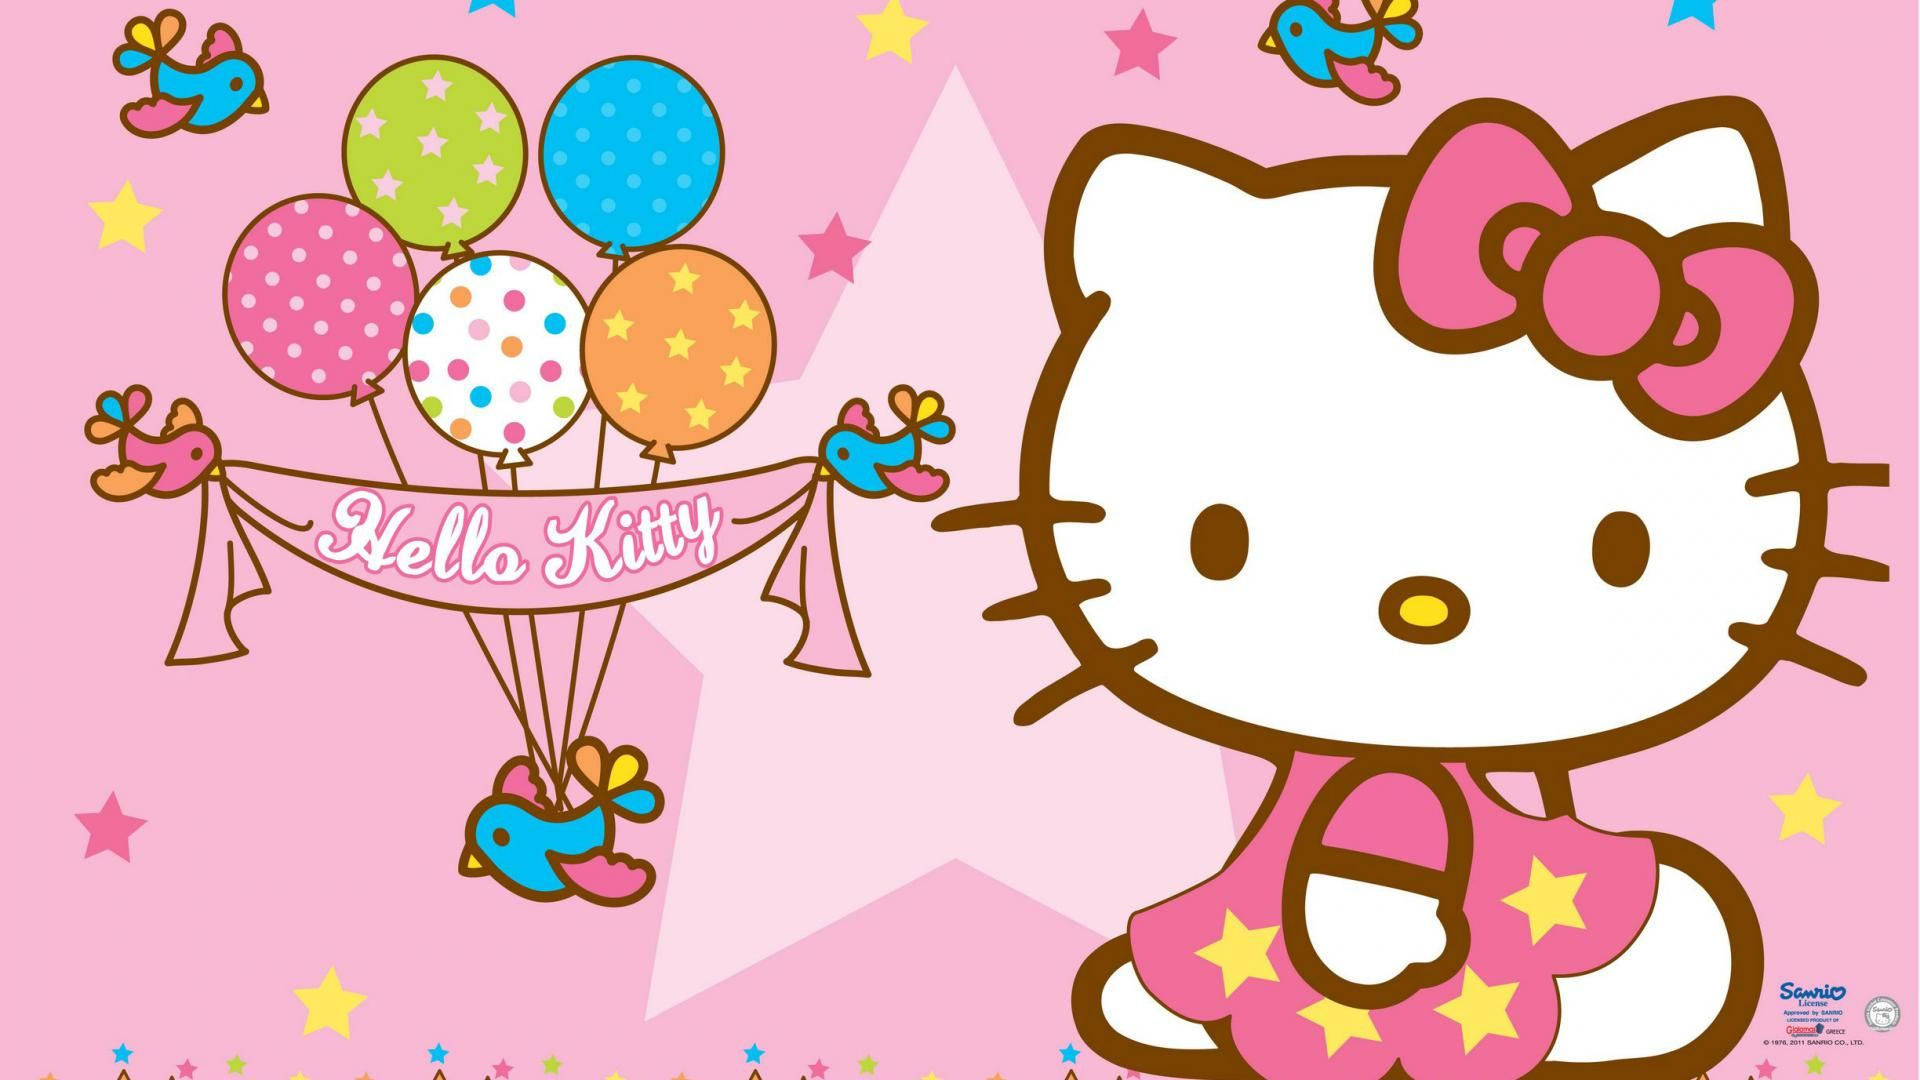 Let's Celebrate! Hello Kitty Party Balloons! Wallpaper